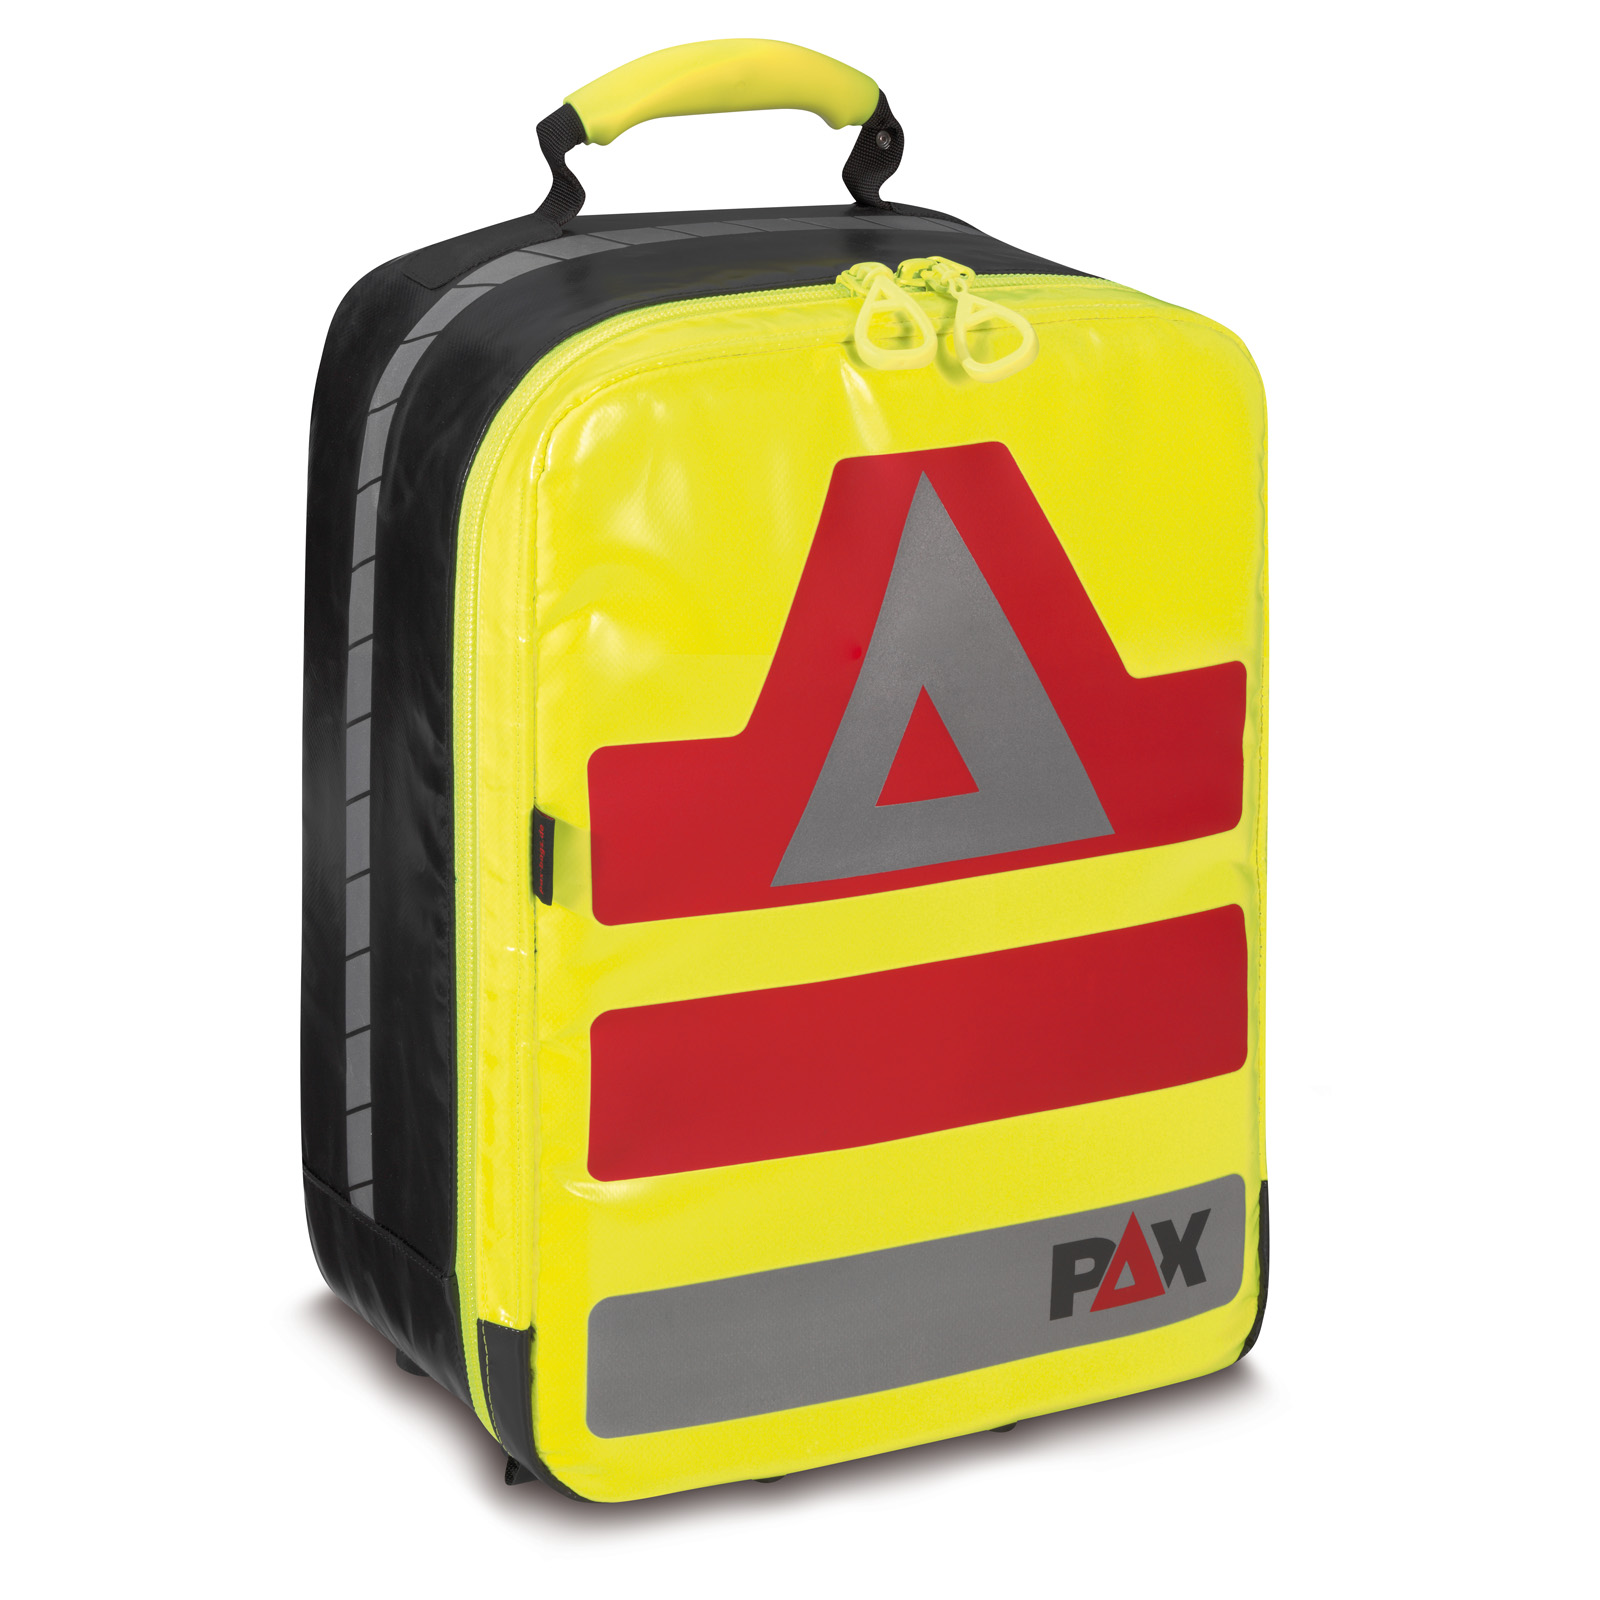 Rapid response team backpack Pax-plan